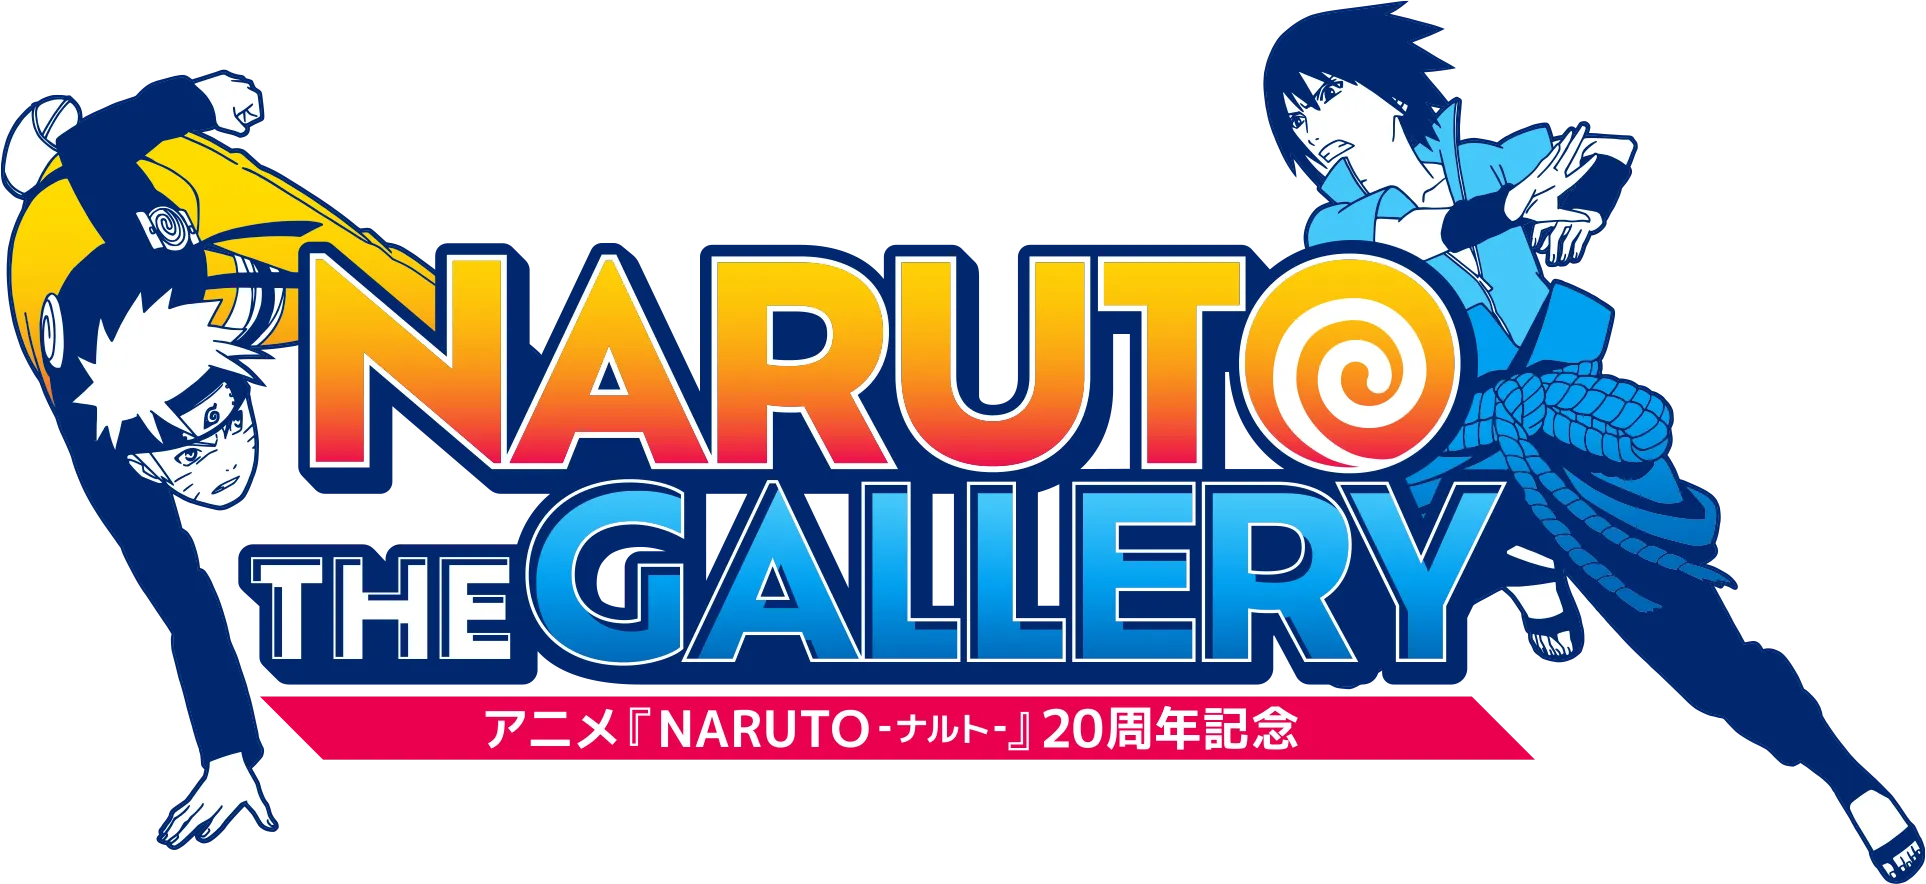 NARUTO THE GALLERY - アニメ『NARUTO』20周年記念